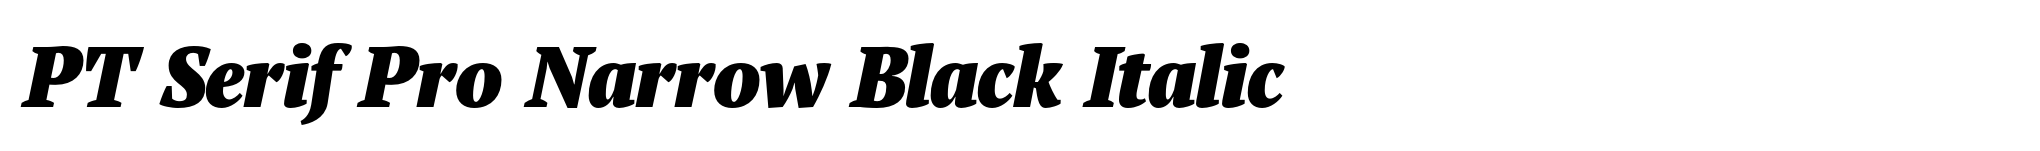 PT Serif Pro Narrow Black Italic image